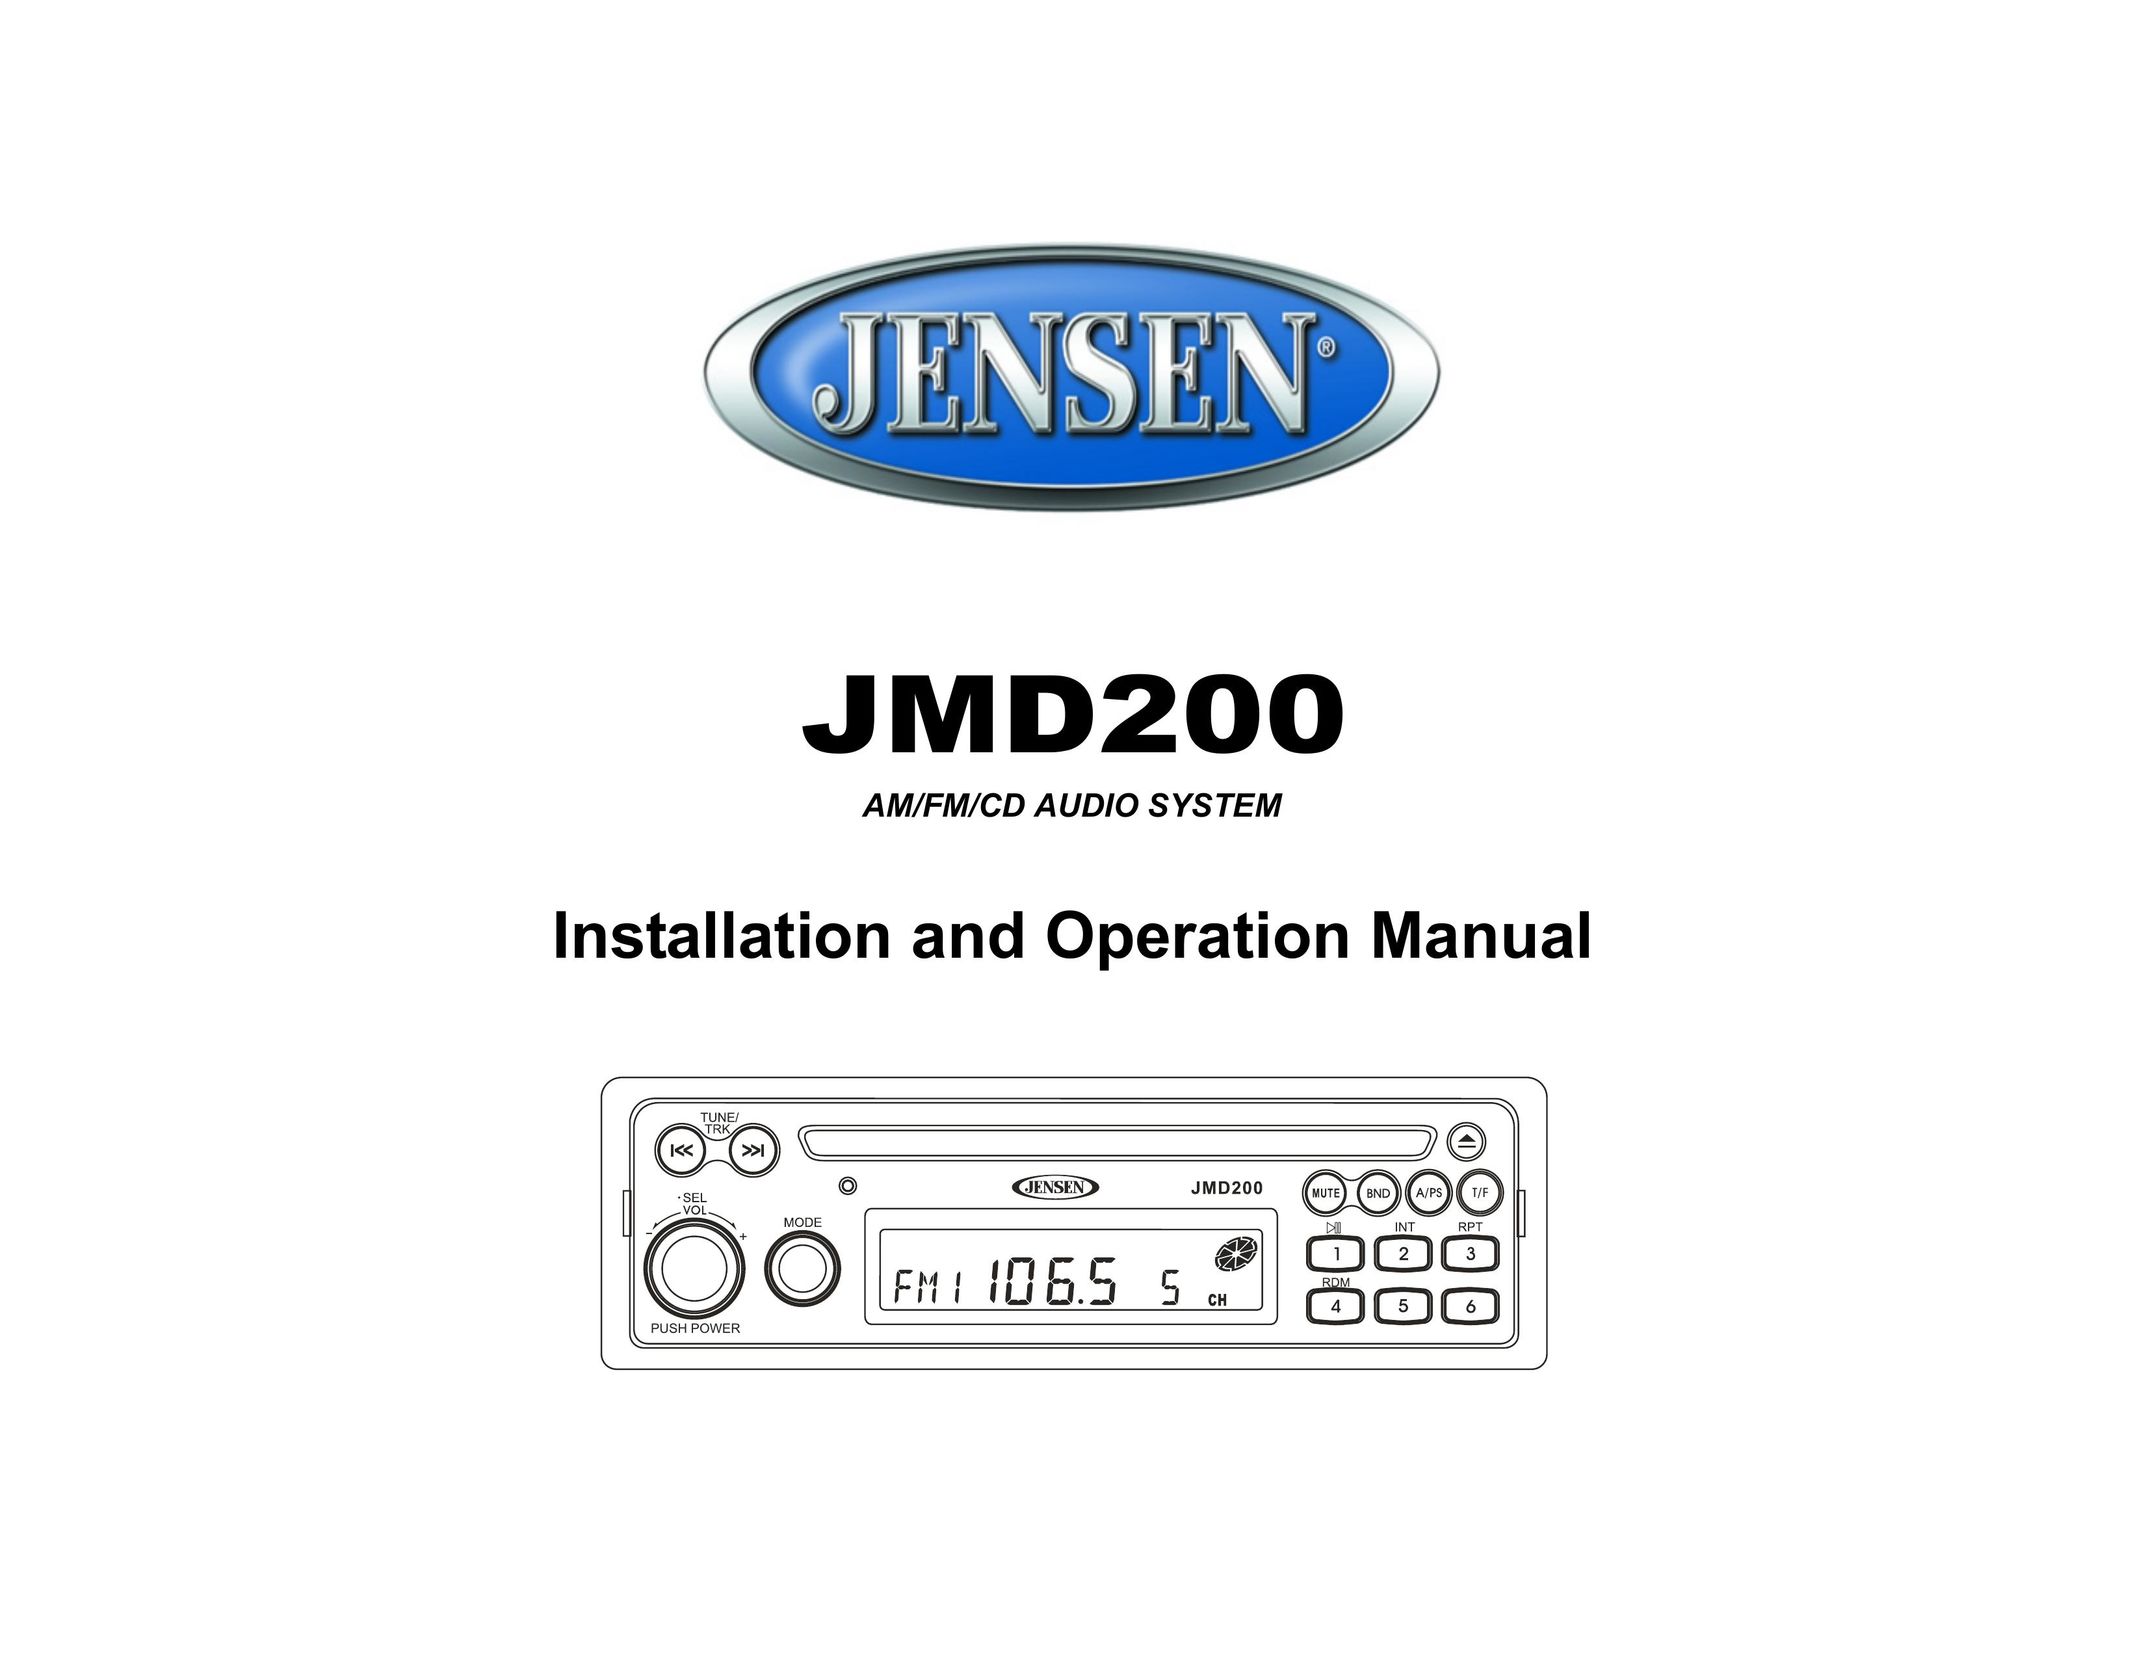 Jensen JMD200 Car Stereo System User Manual